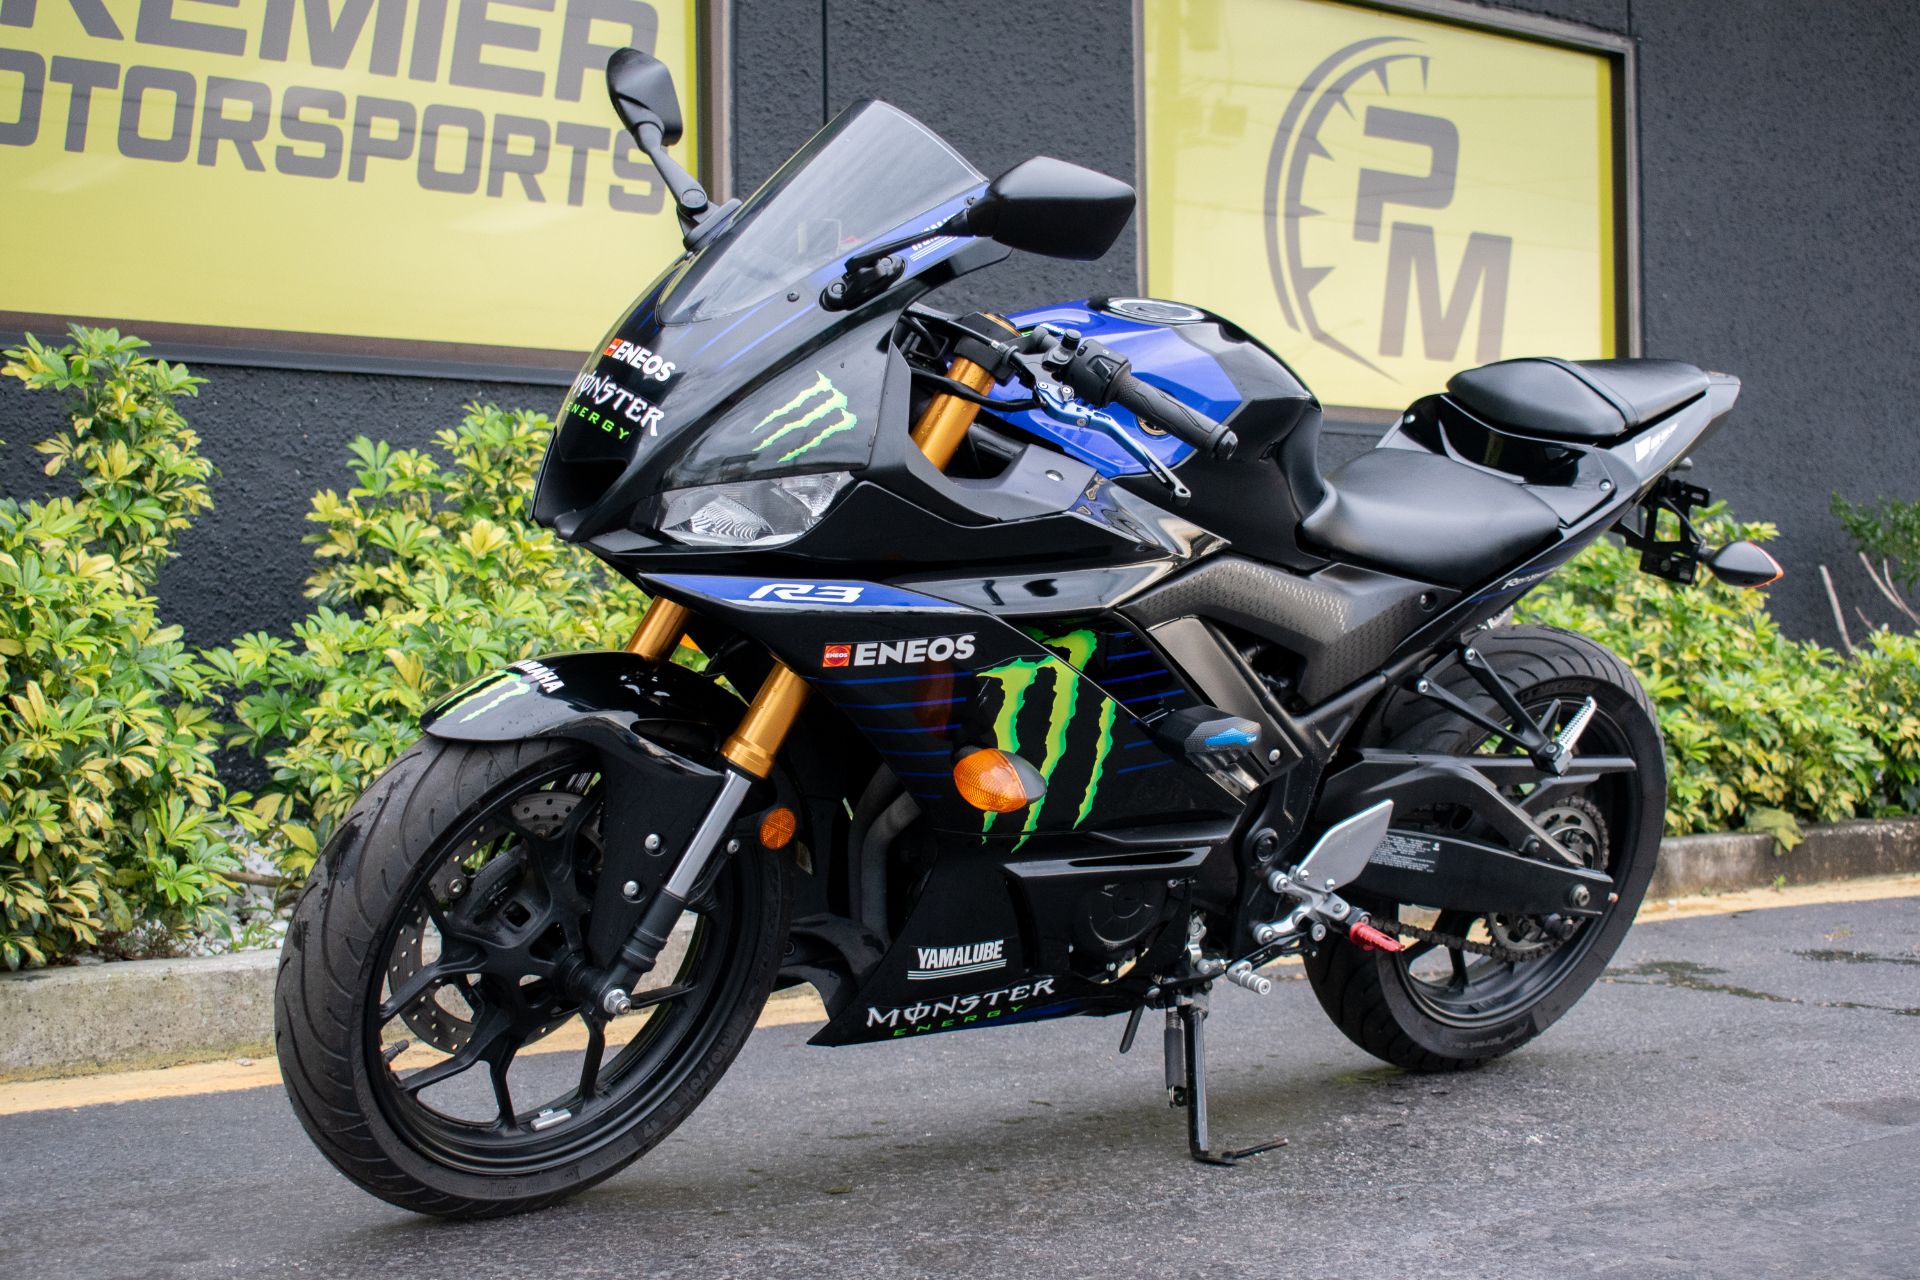 2020 Yamaha YZF-R3 Monster Energy Yamaha MotoGP Edition in Jacksonville, Florida - Photo 12